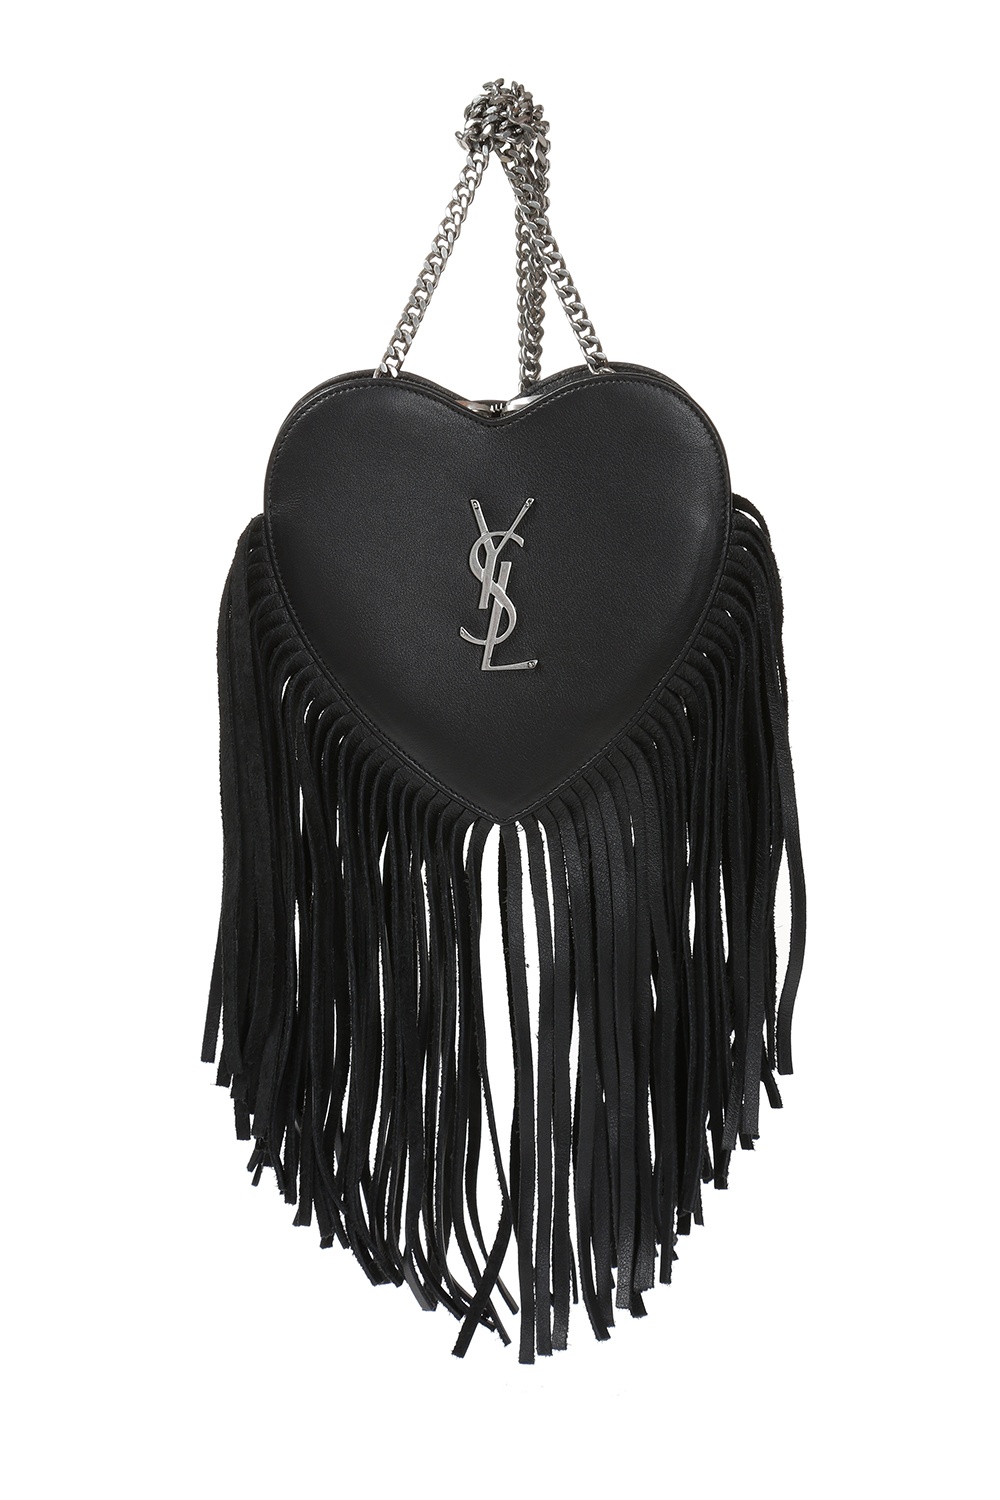 Saint Laurent Monogram Small Zip-Top Fringe Heart Bag - Black